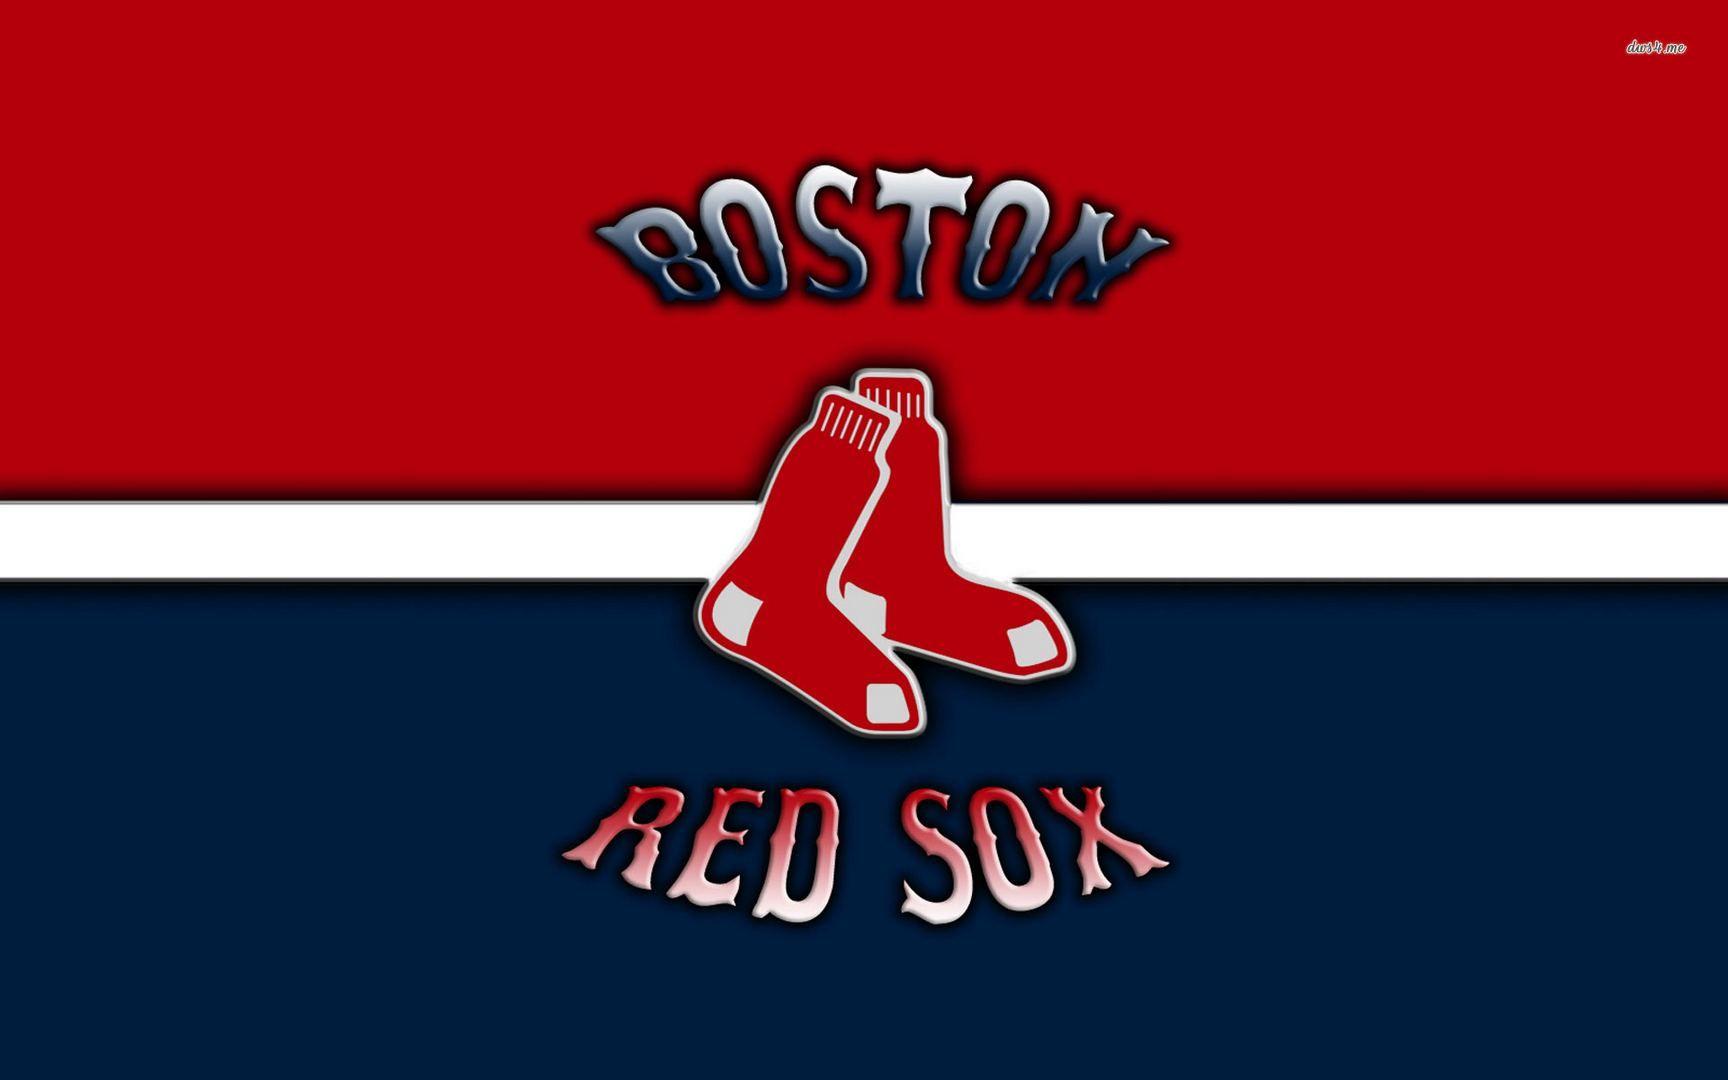 Boston Red Sox wallpaper HD free download